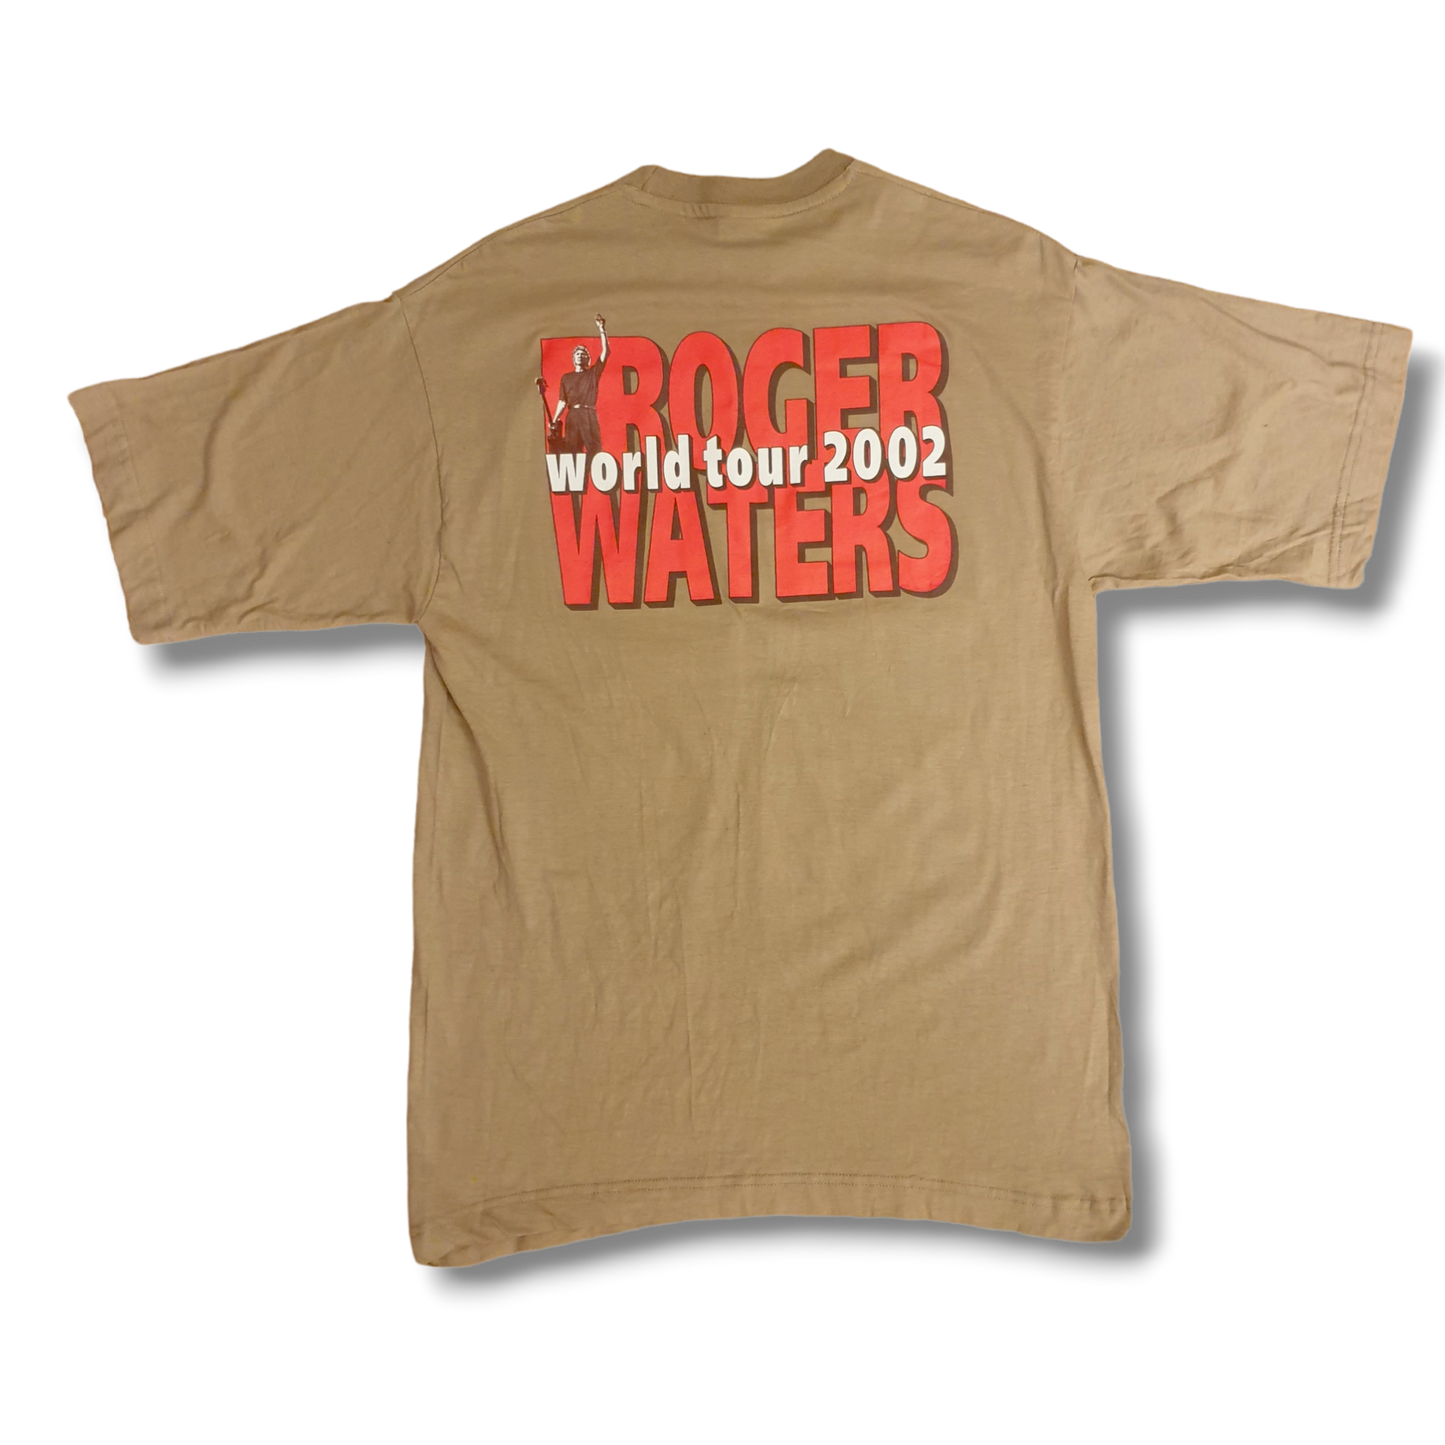 Roger Watters Tour 2002 T-Shirt XS-S